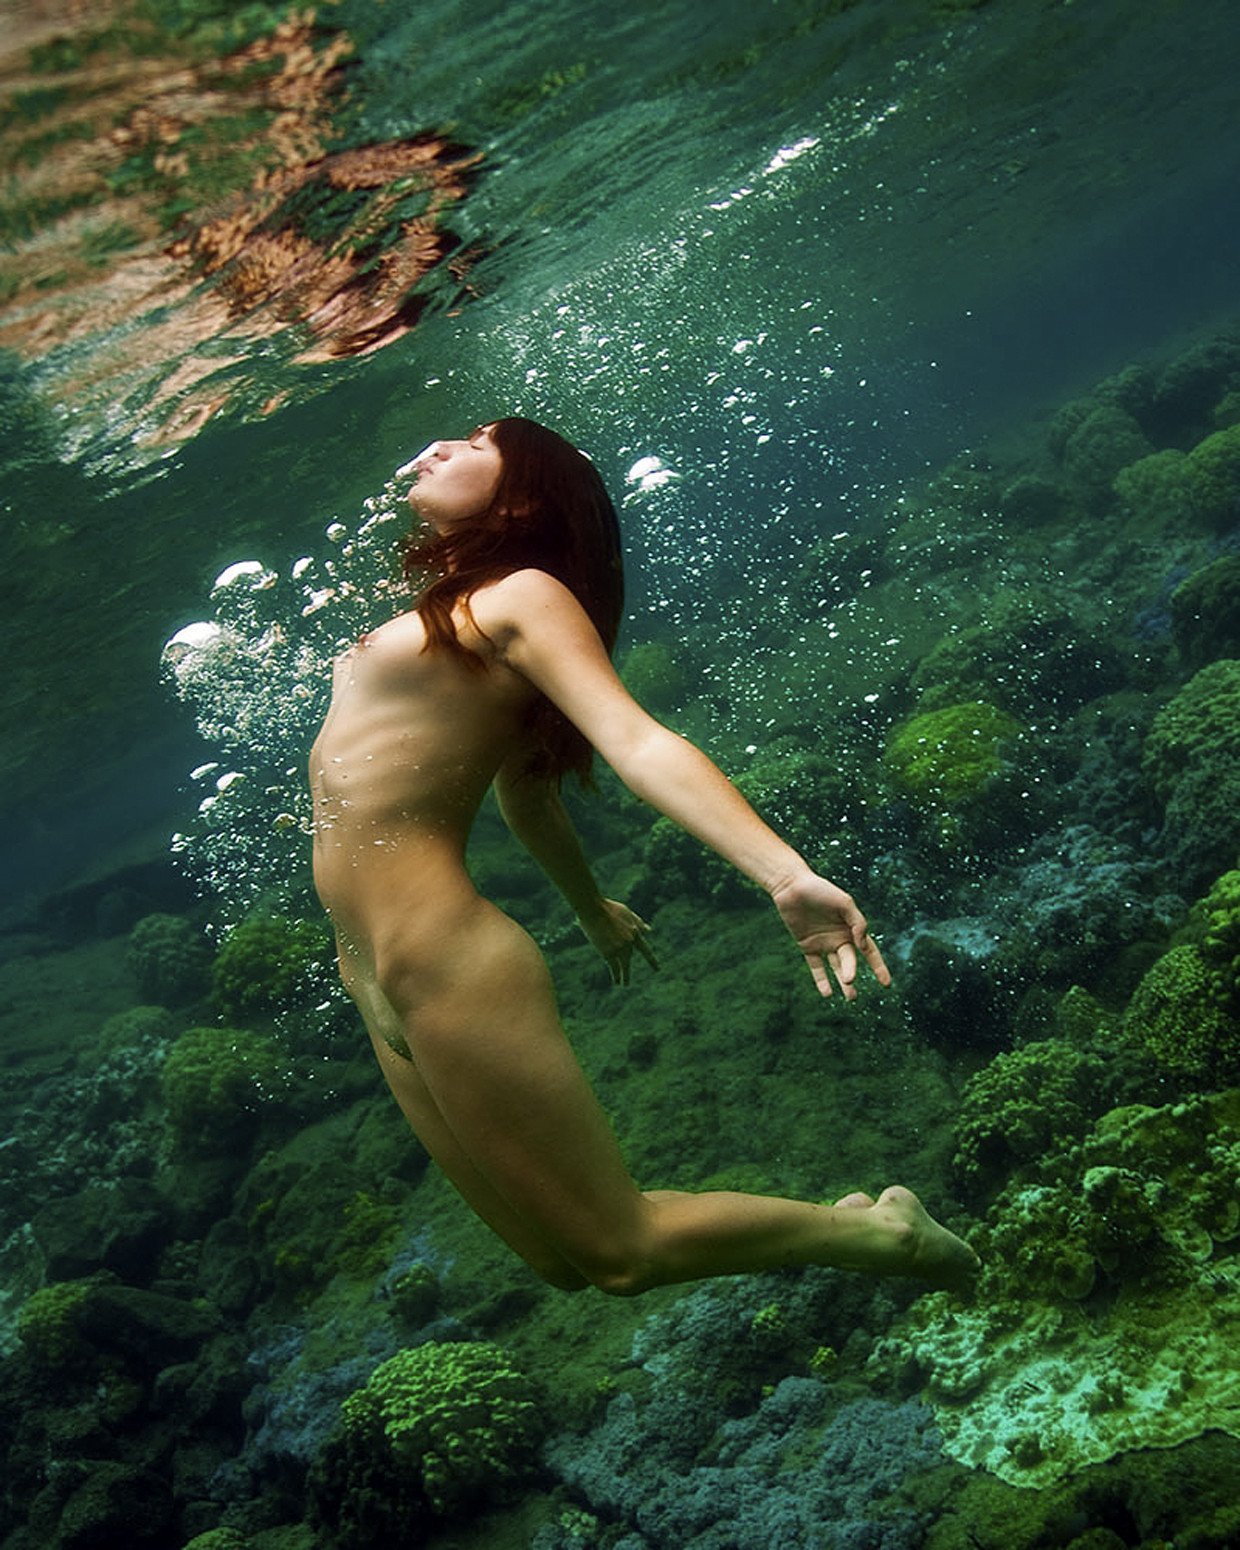 Underwater Milf Sex - Nude Women Underwater - 66 photos